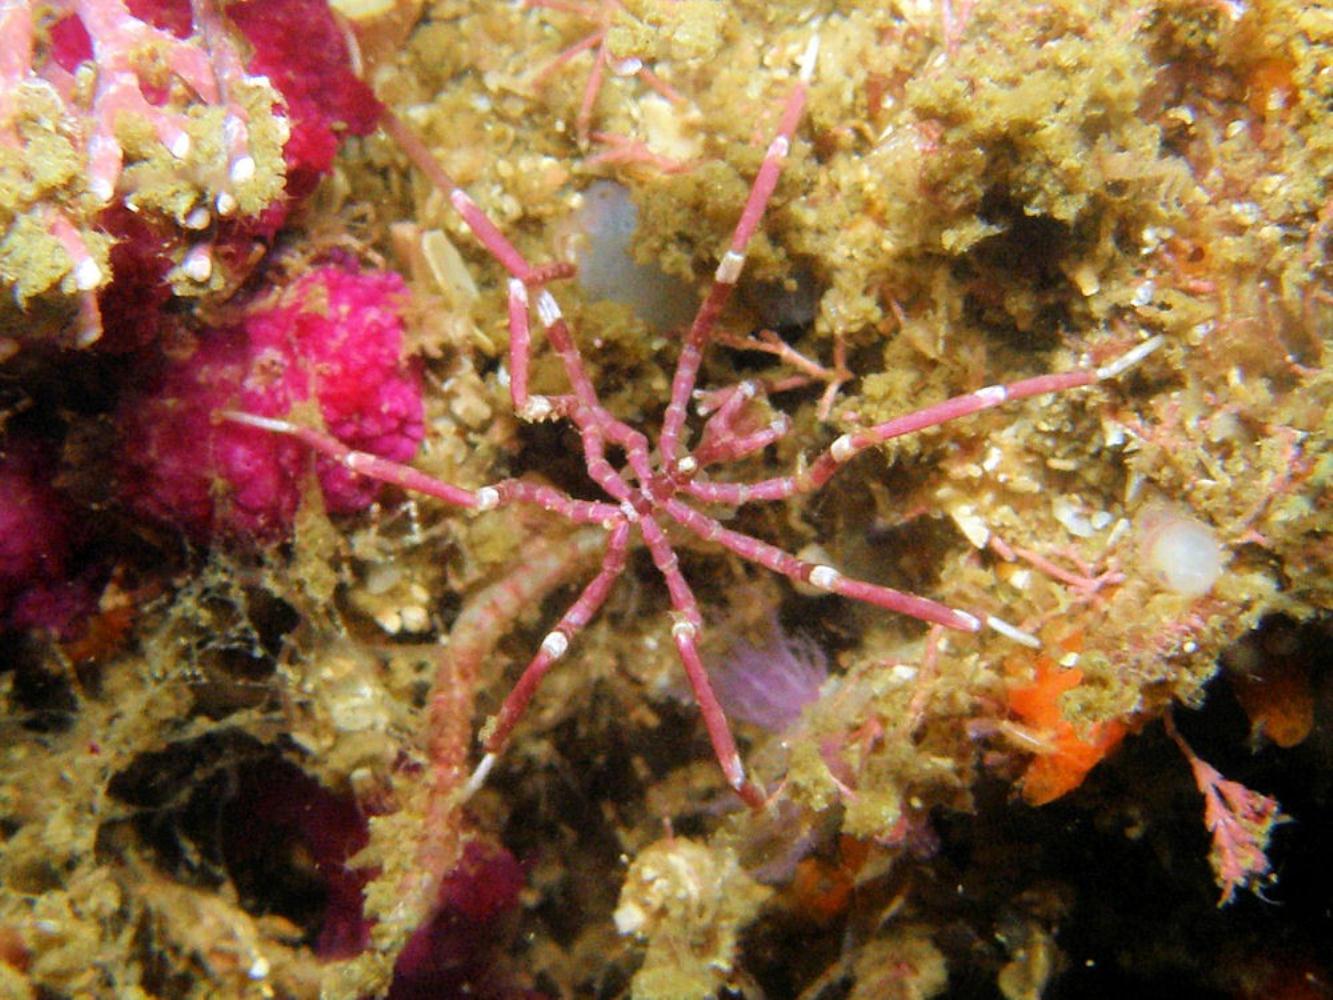 Scarlet sea spider